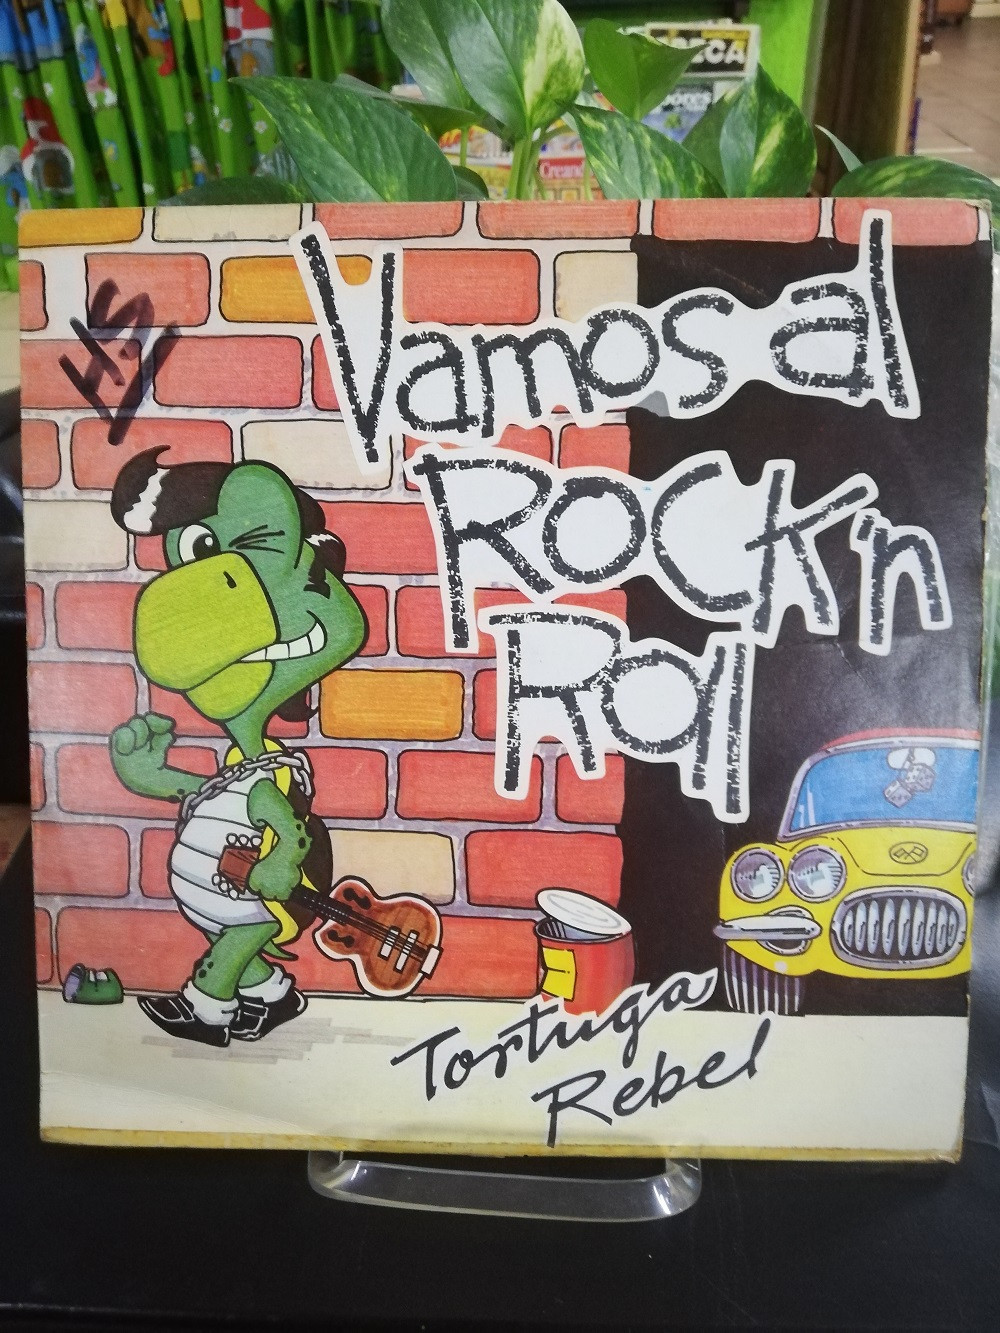 Imagen LP TORTUGA REBEL - VAMOS AL ROCK AND ROLL 1